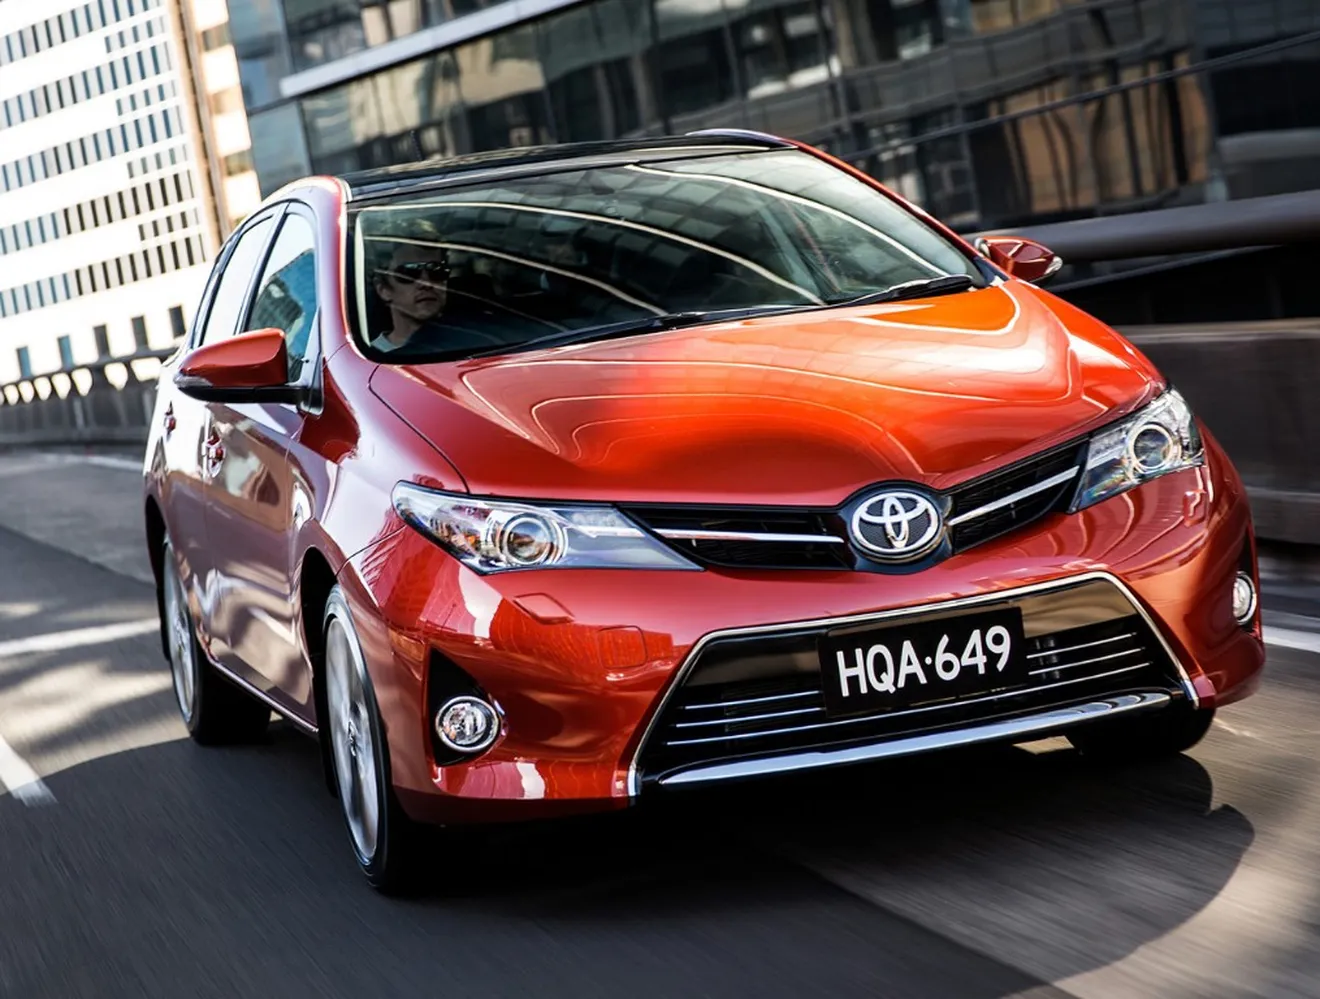 Australia - Marzo 2015: El Toyota Corolla bate sus récords